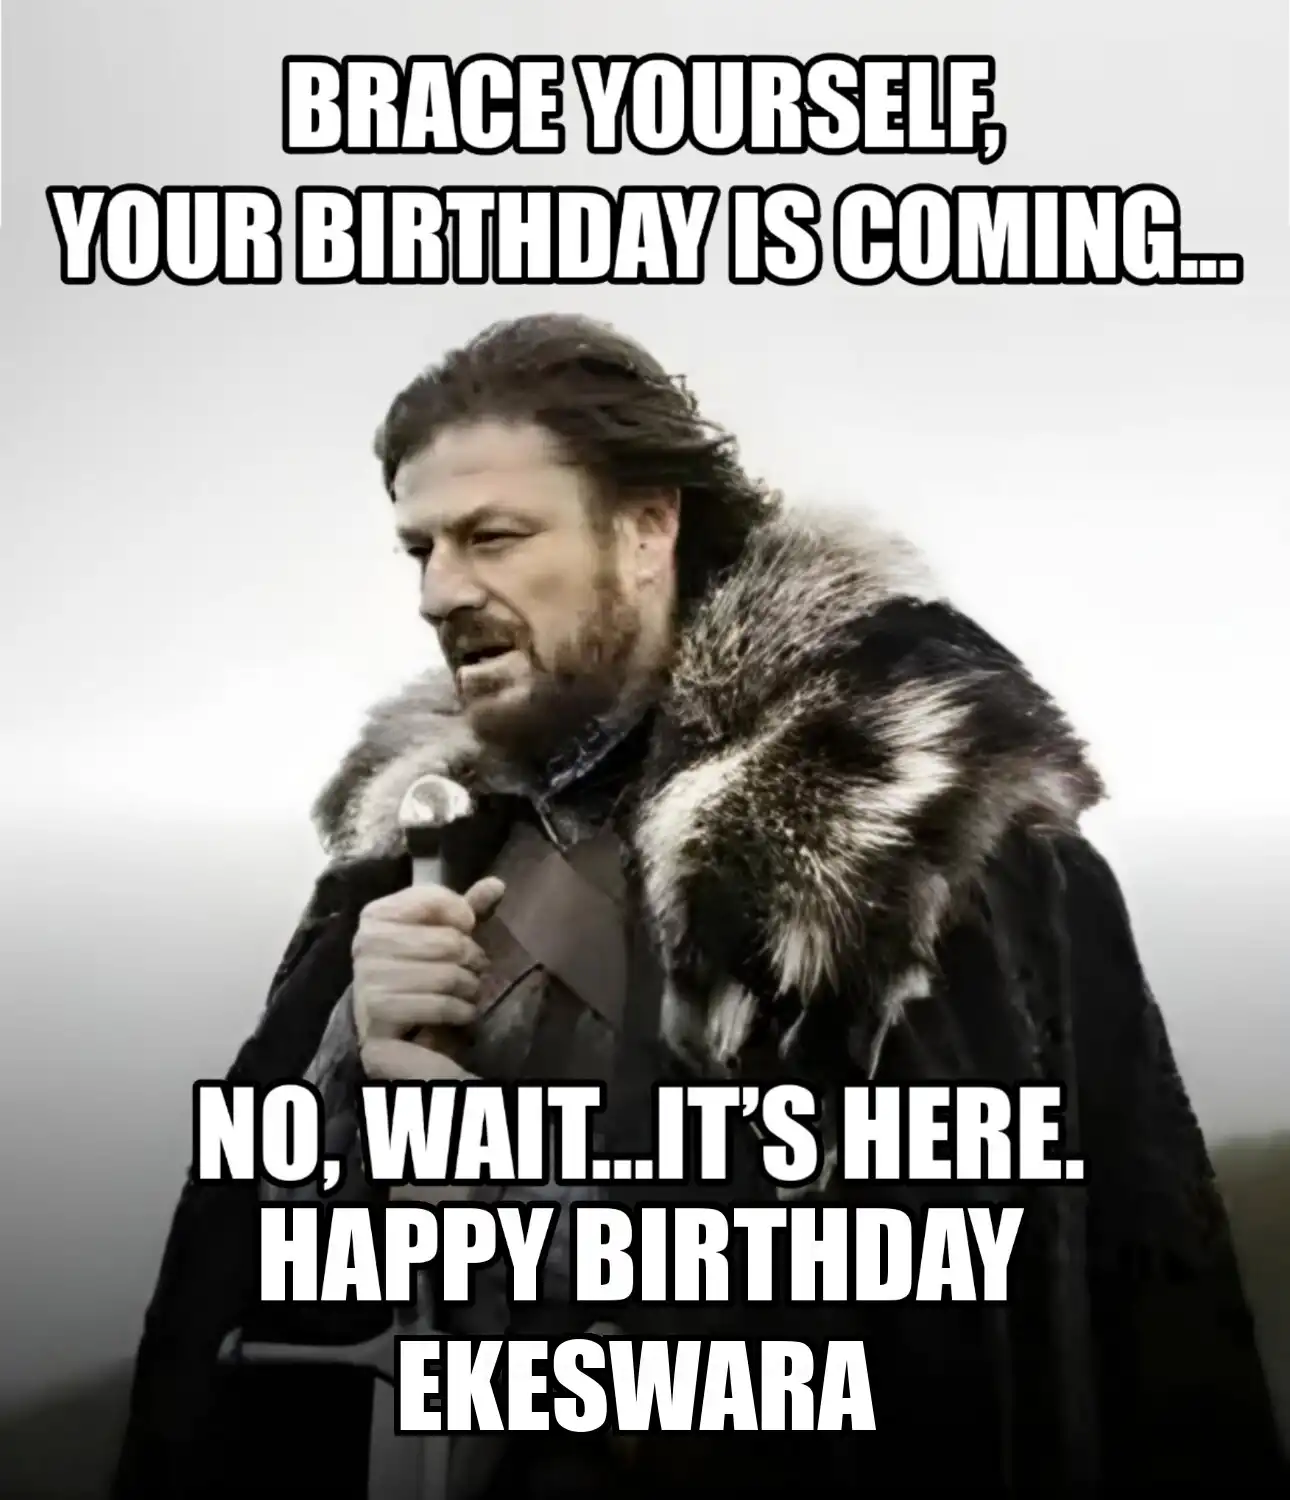 Happy Birthday Ekeswara Brace Yourself Your Birthday Is Coming Meme